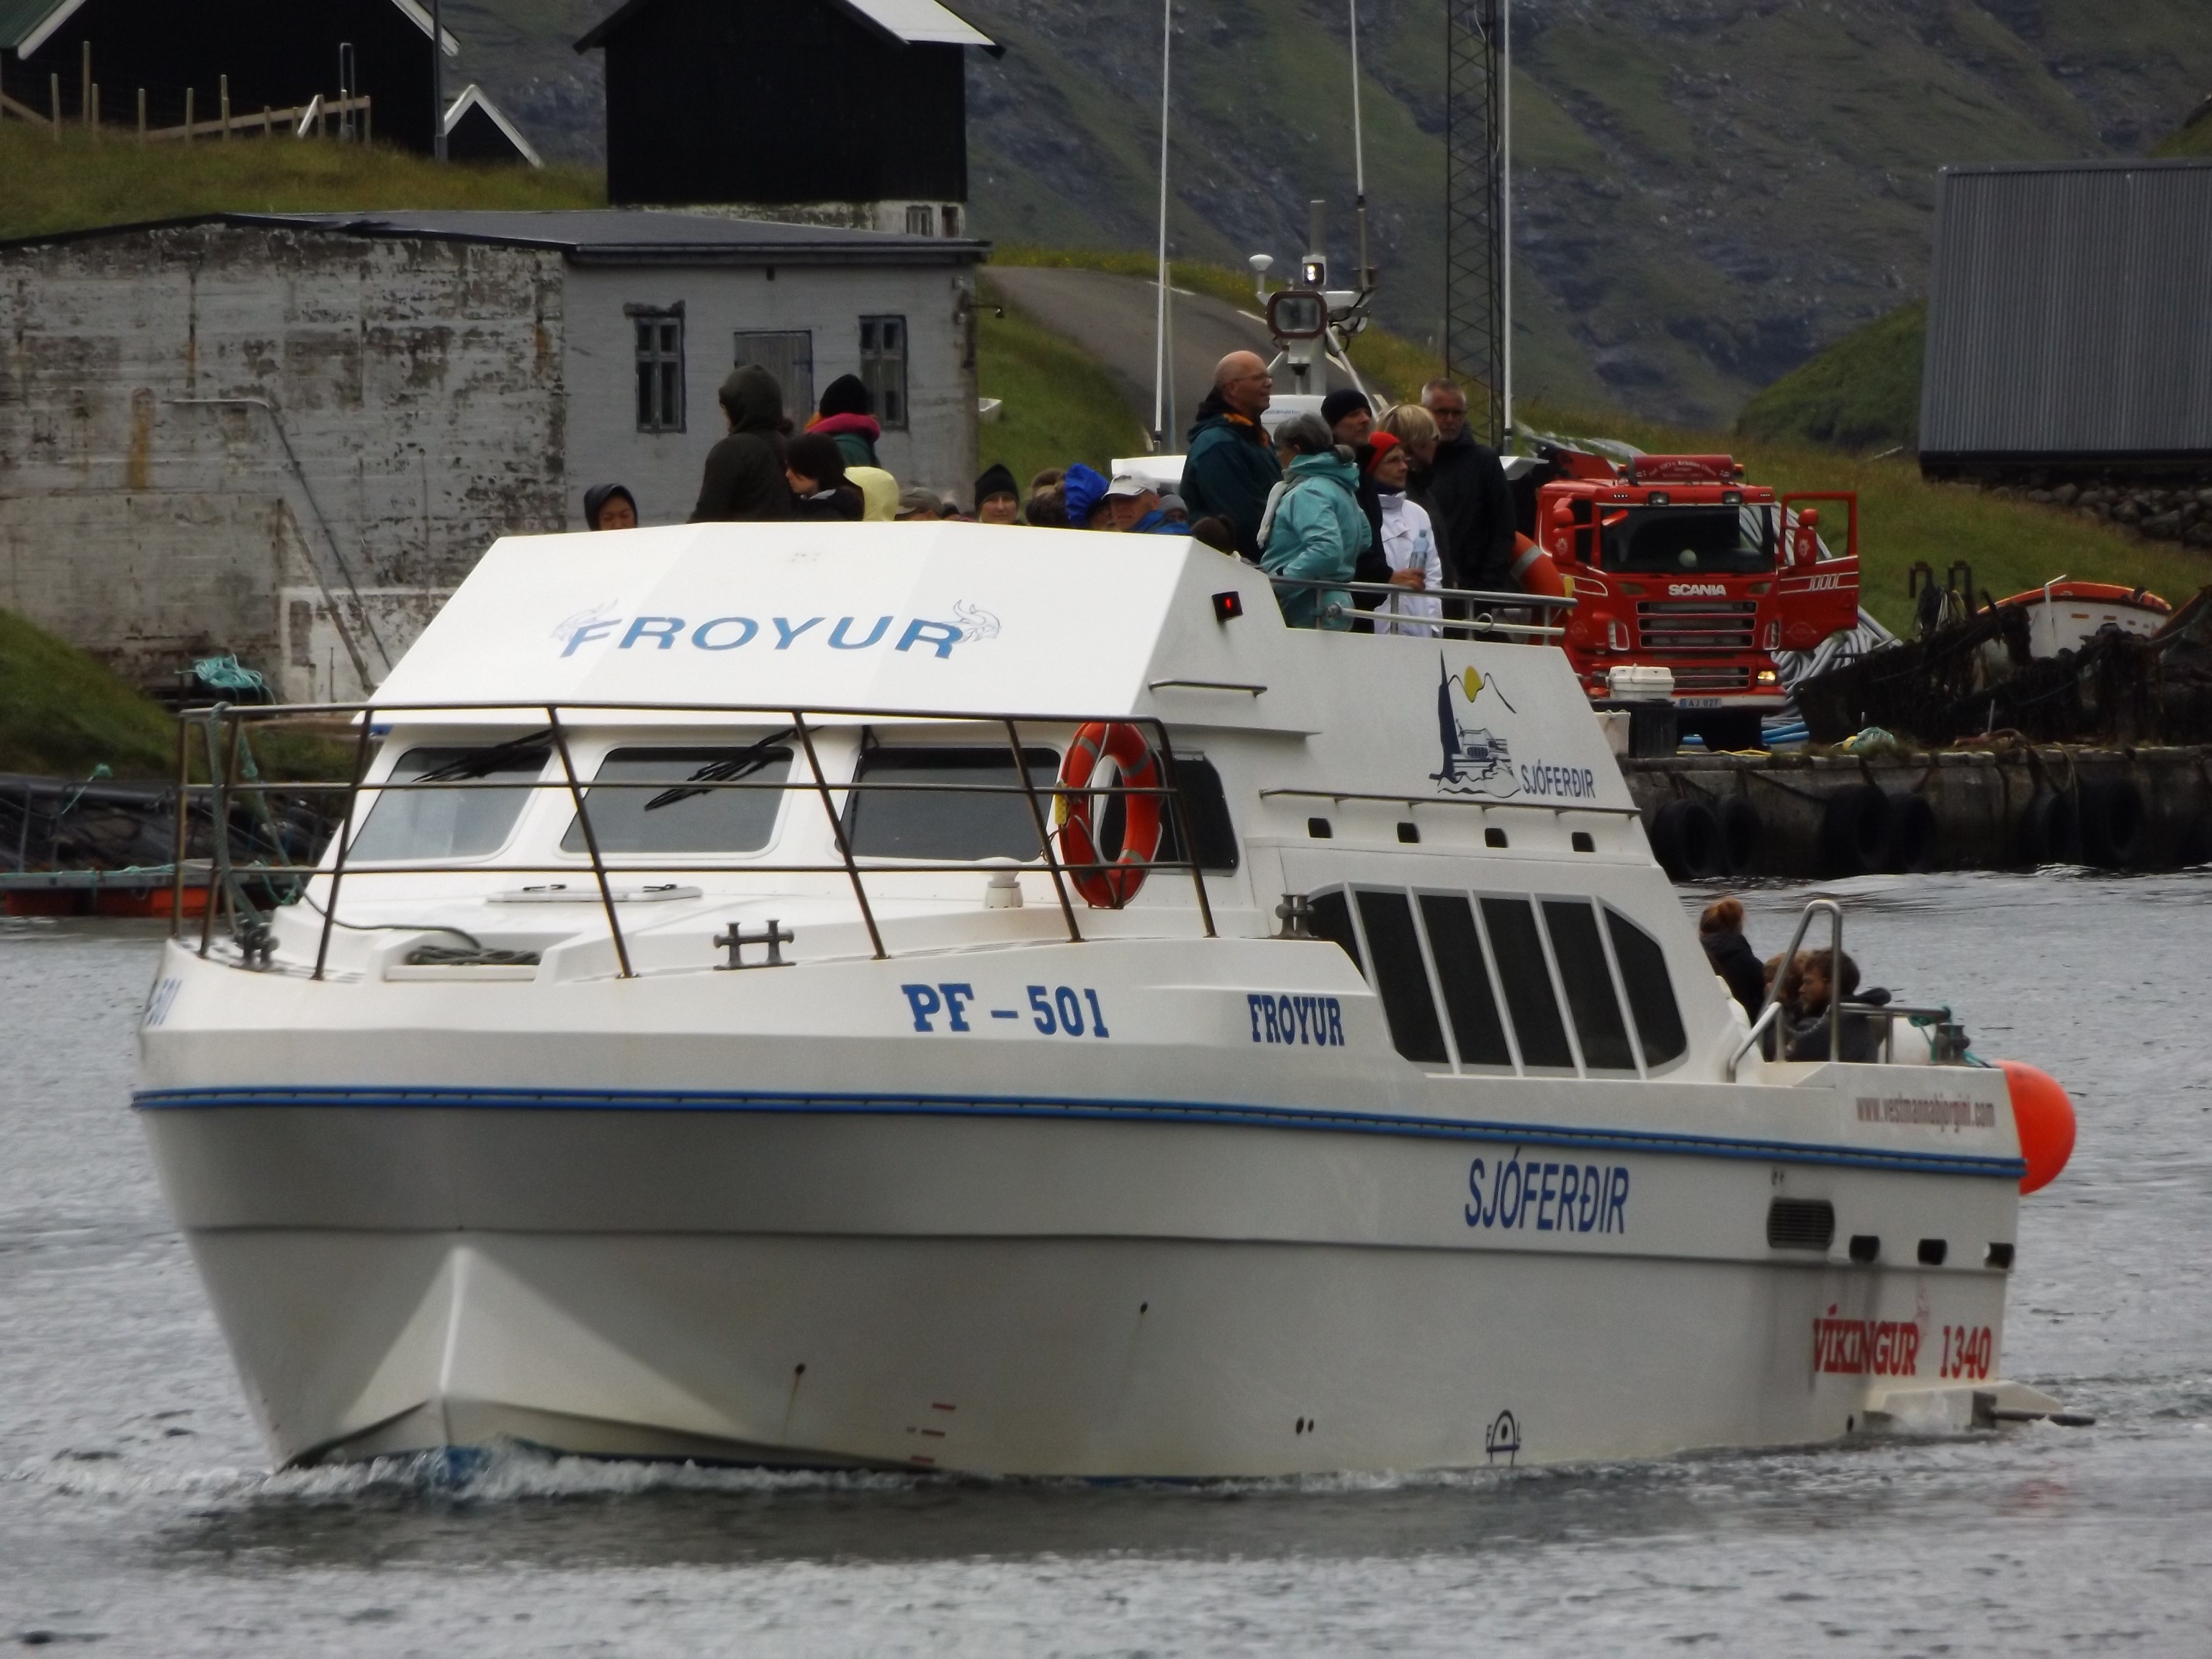 Excursion Boat at Vestmanna, Faroe Islands, 17 July 2018